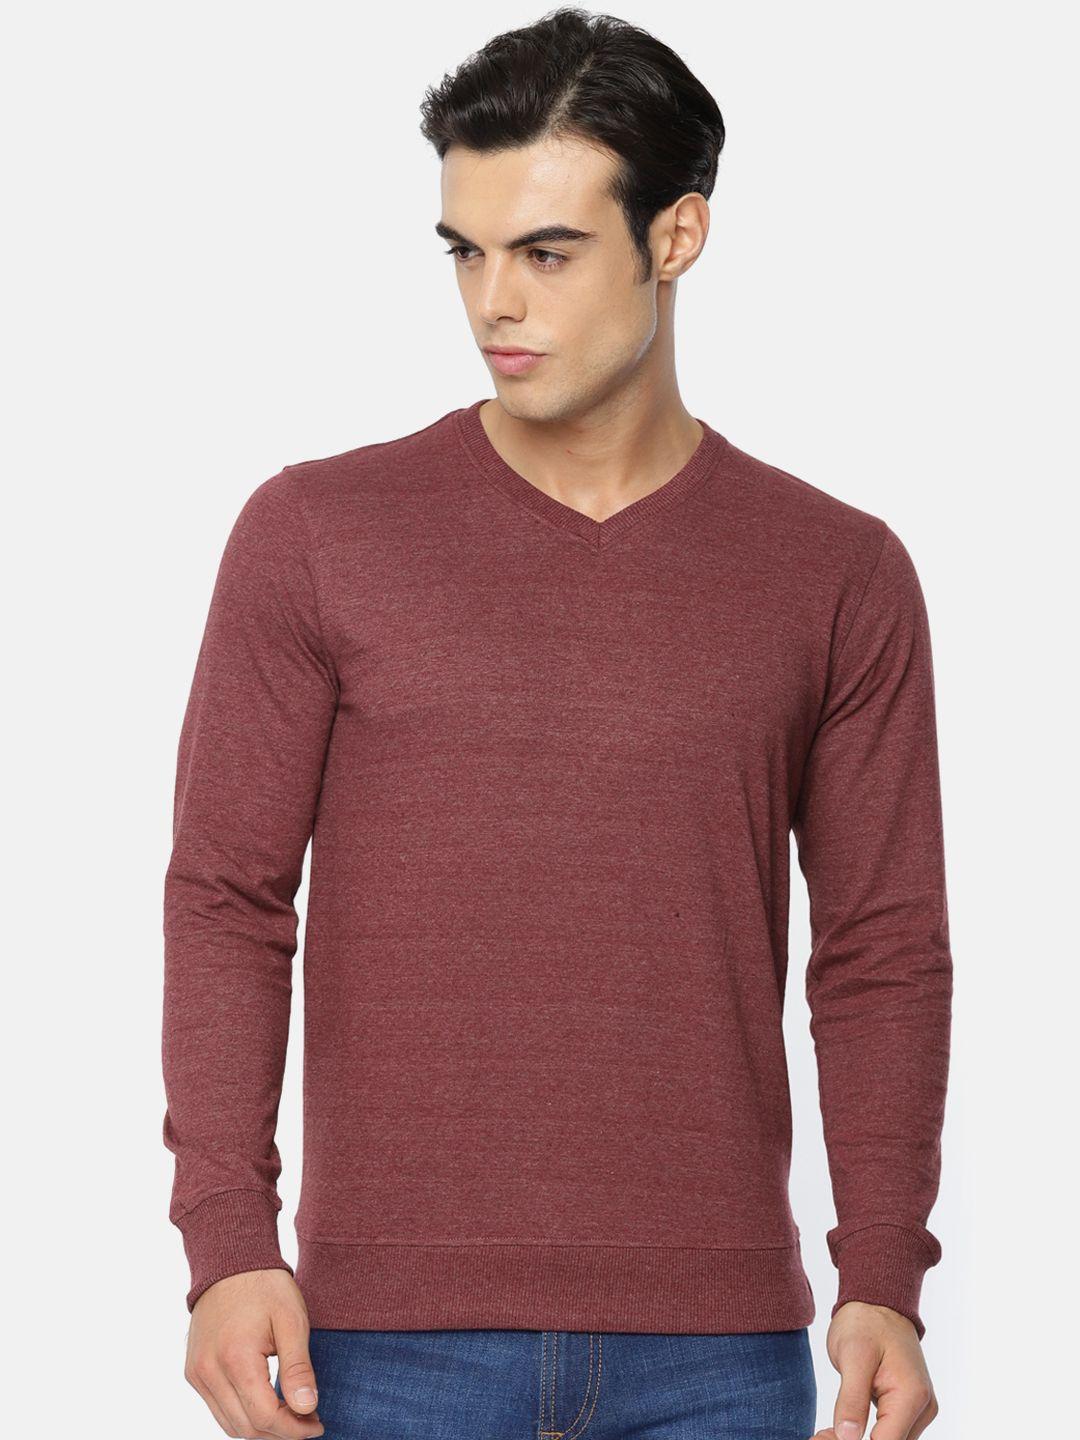 arise men maroon solid v-neck t-shirt